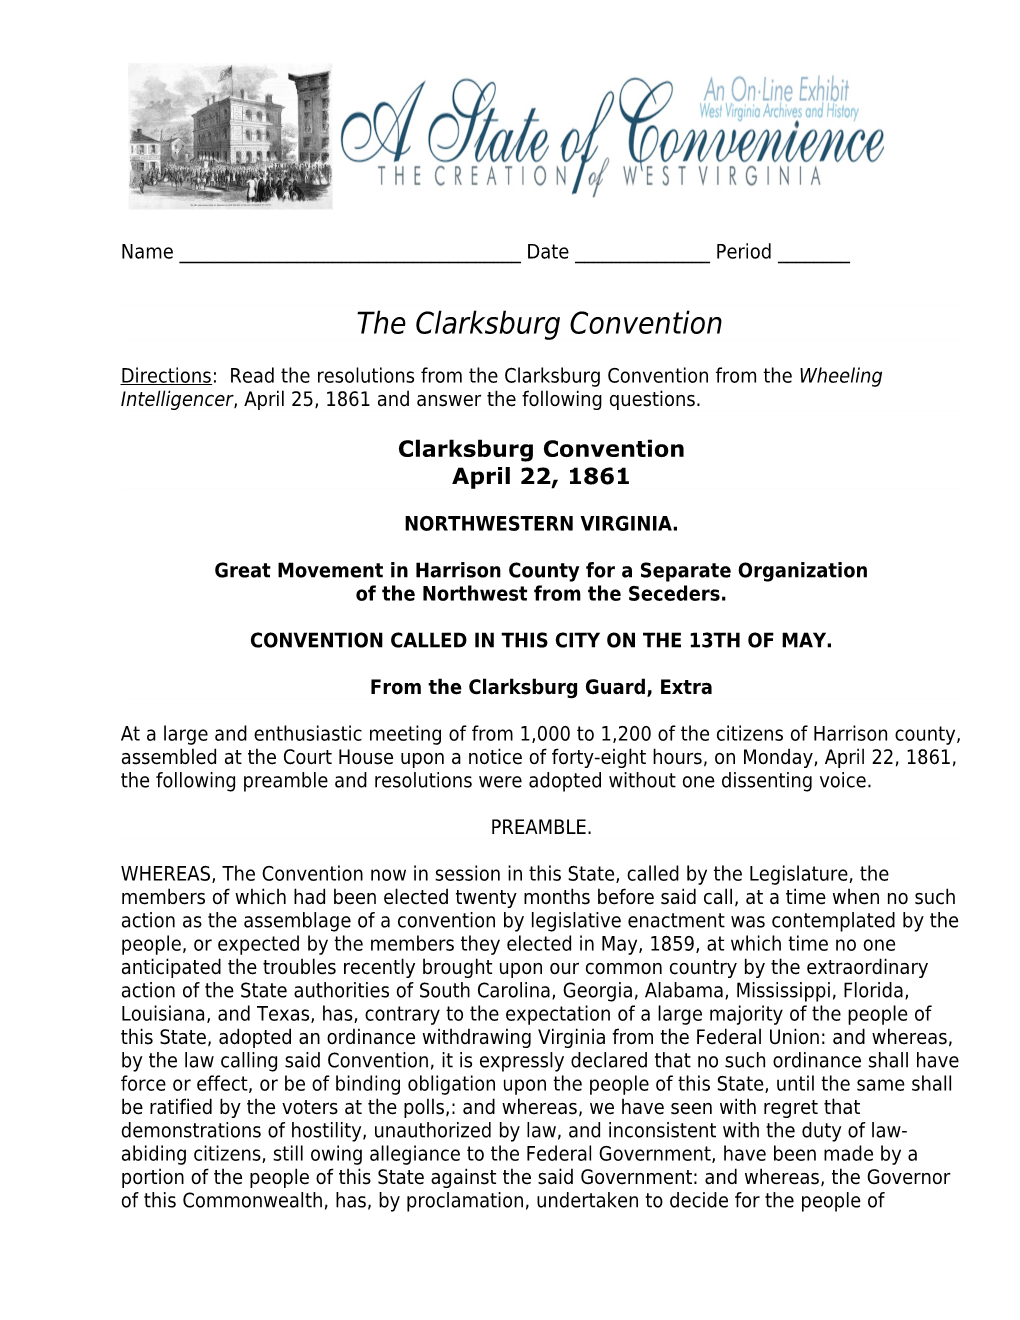 The Clarksburg Convention